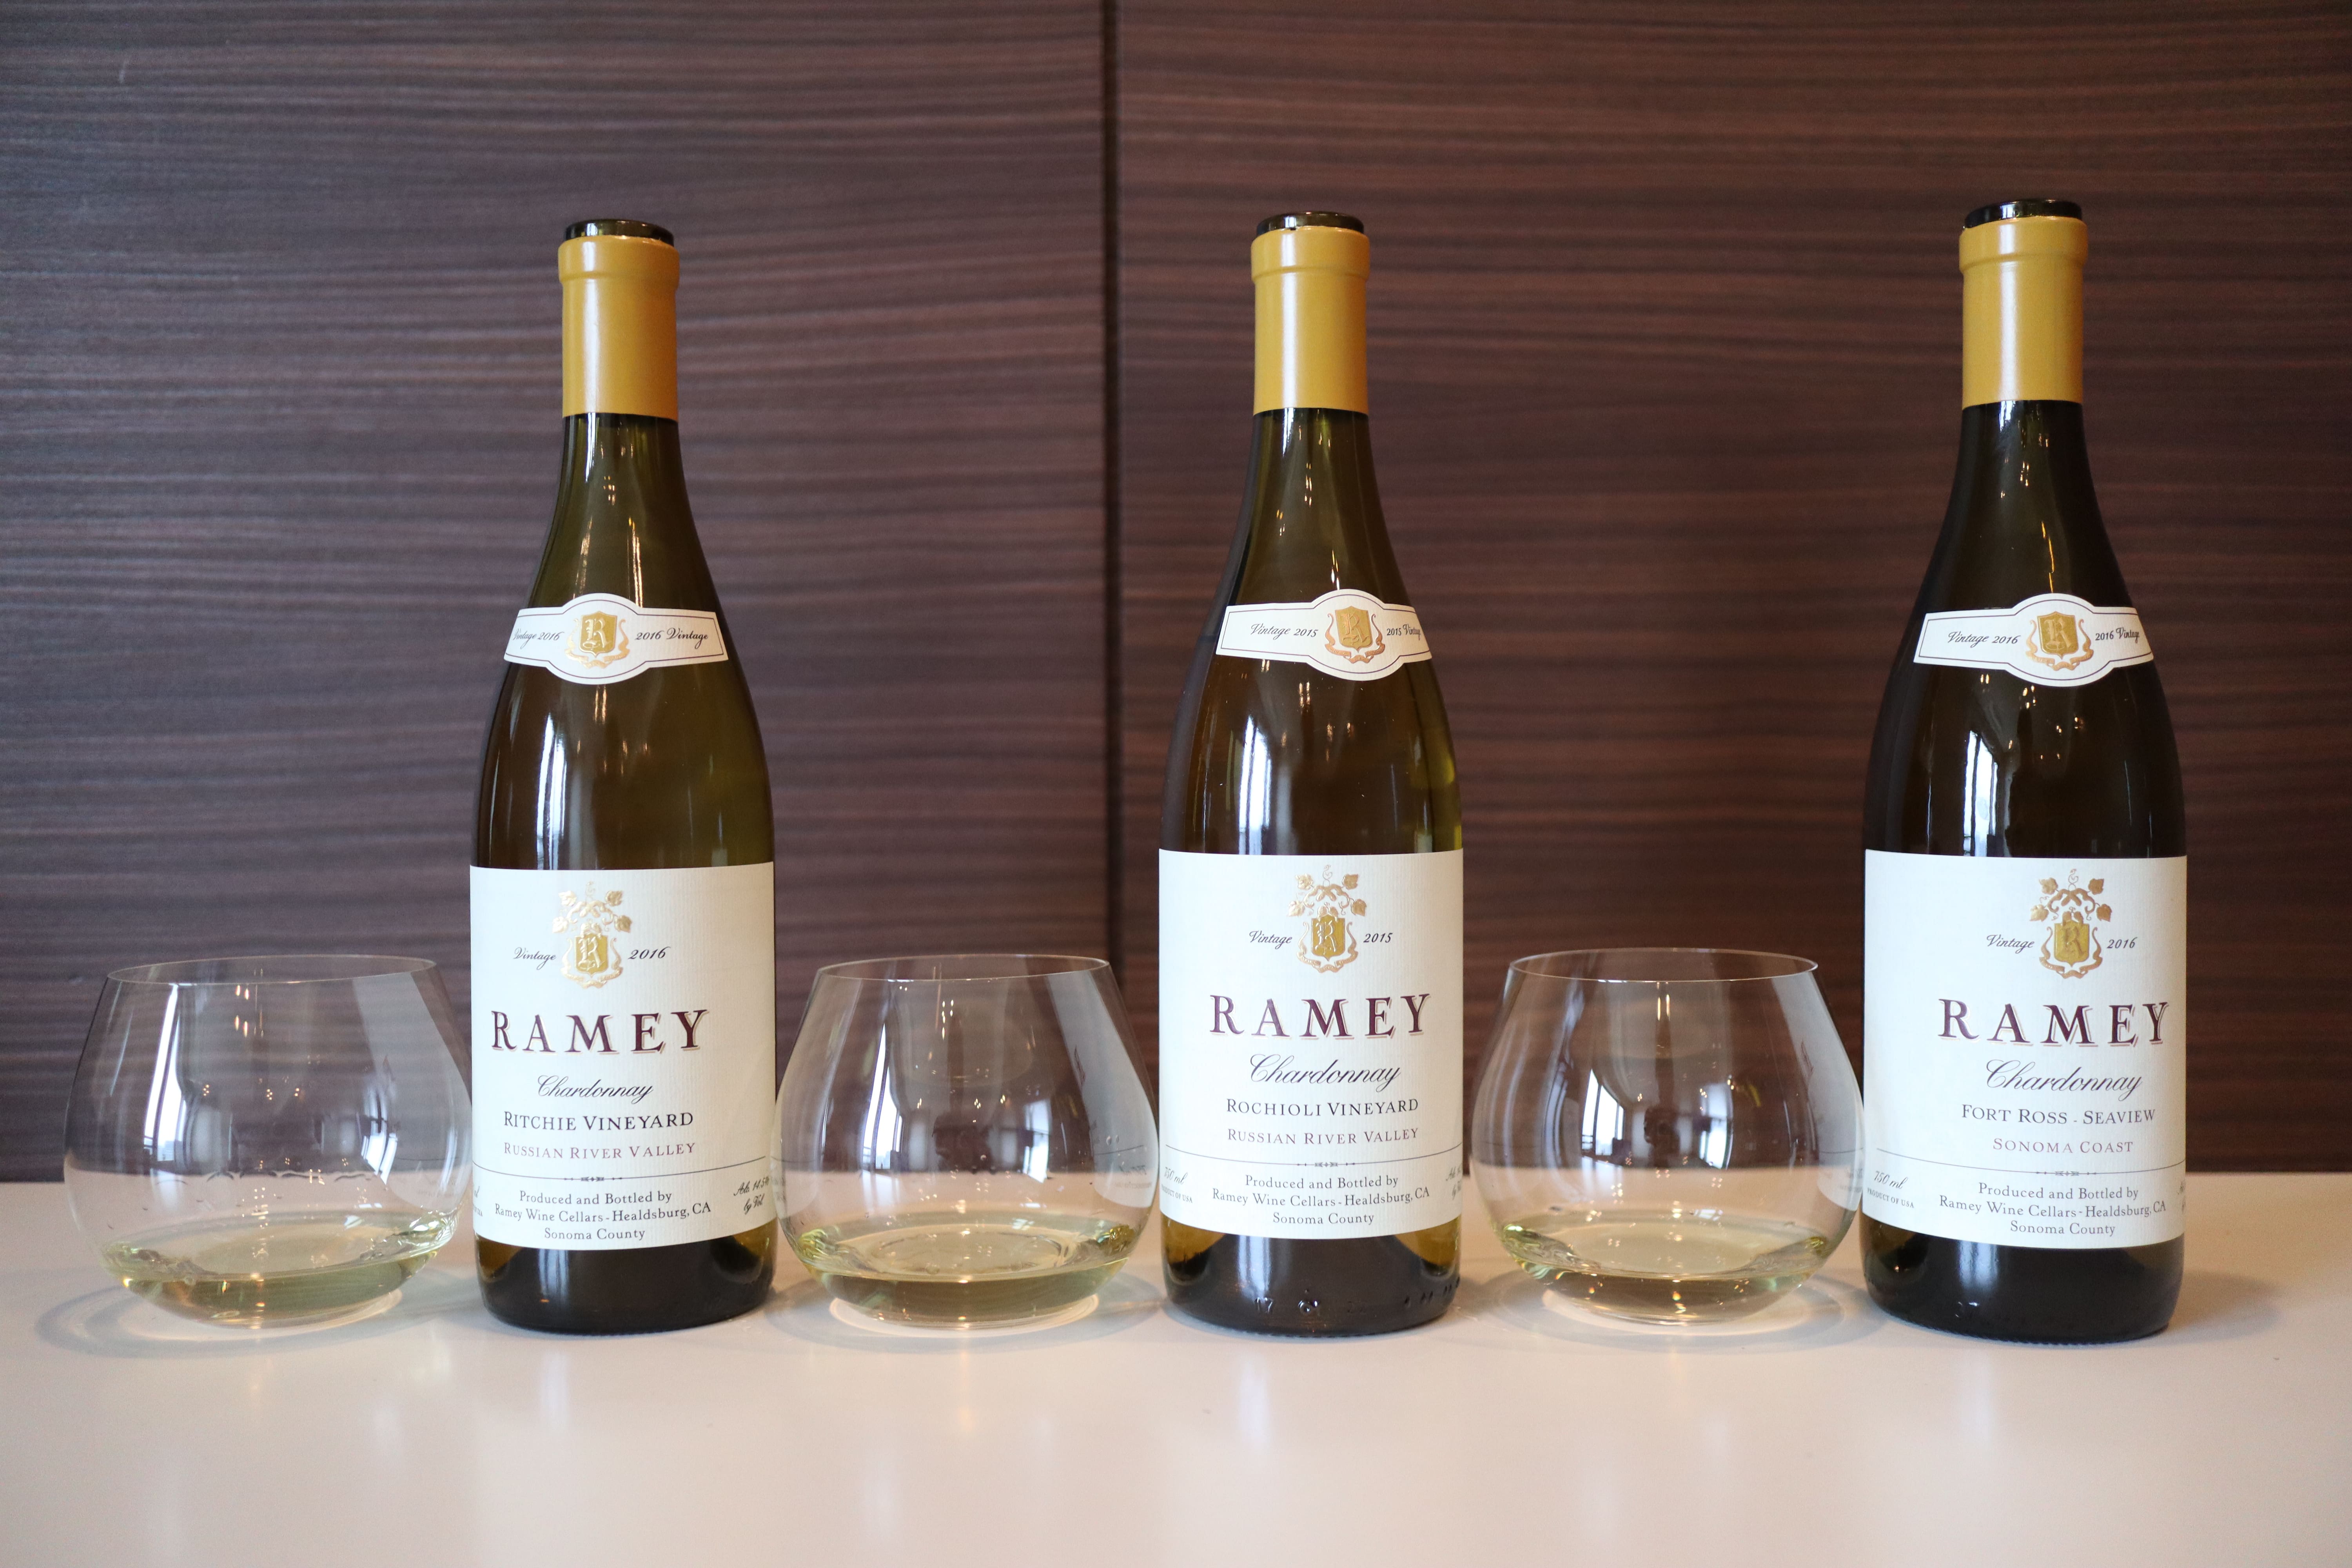 Ramey Chardonnay Ritchie Vineyard vs Rochioli Vineyard vs Fort Ross-Seaview